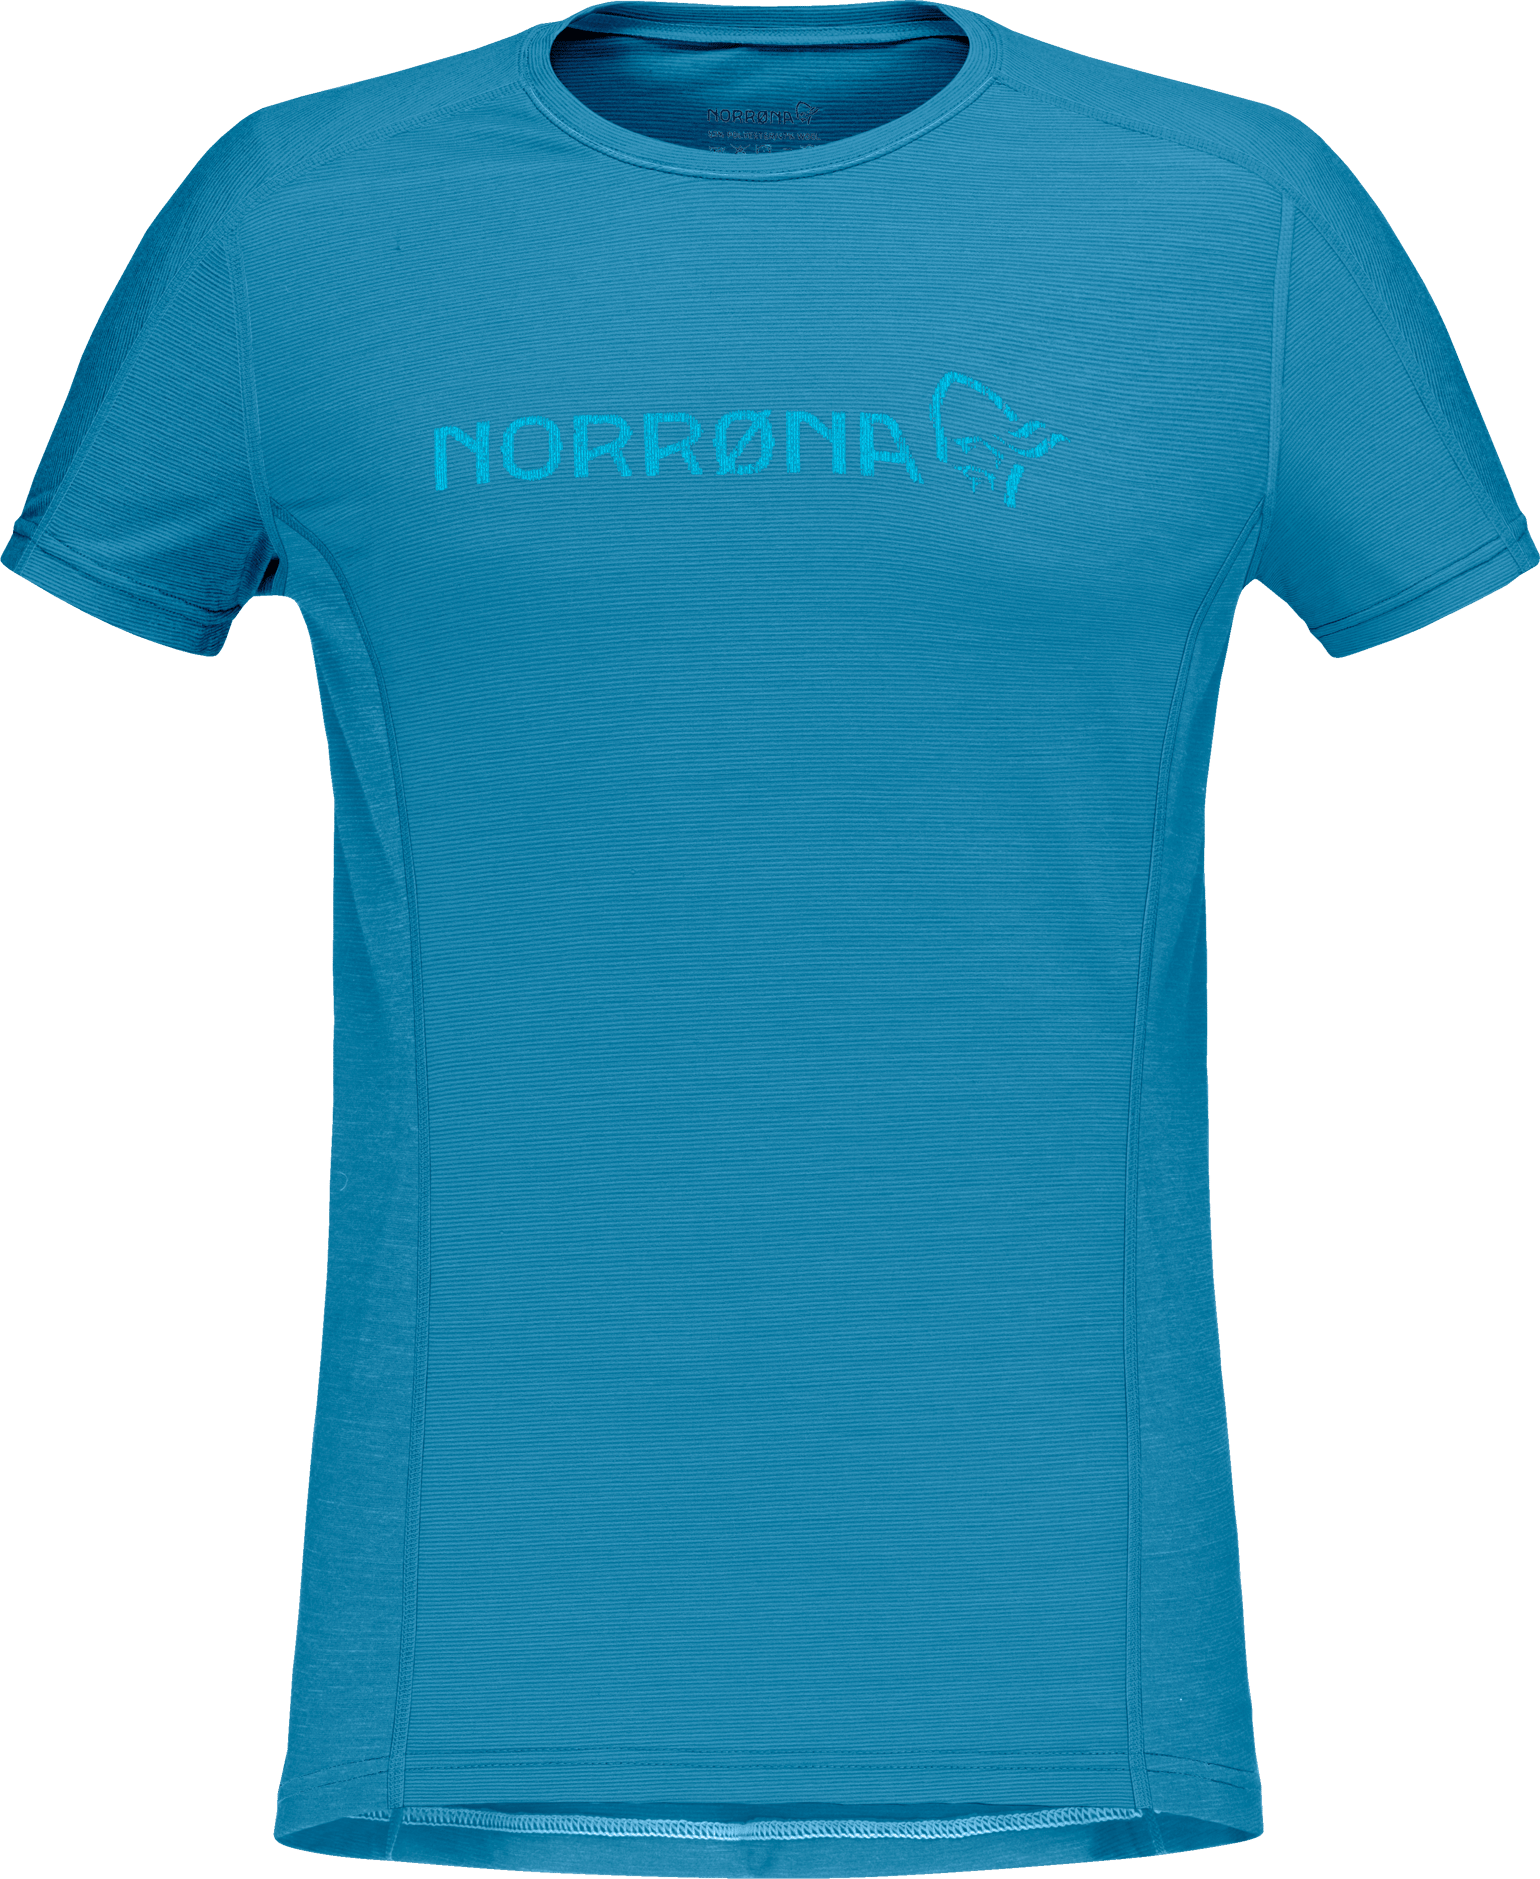 Norrøna Women's Falketind Equaliser Merino T-Shirt Hawaiian Surf